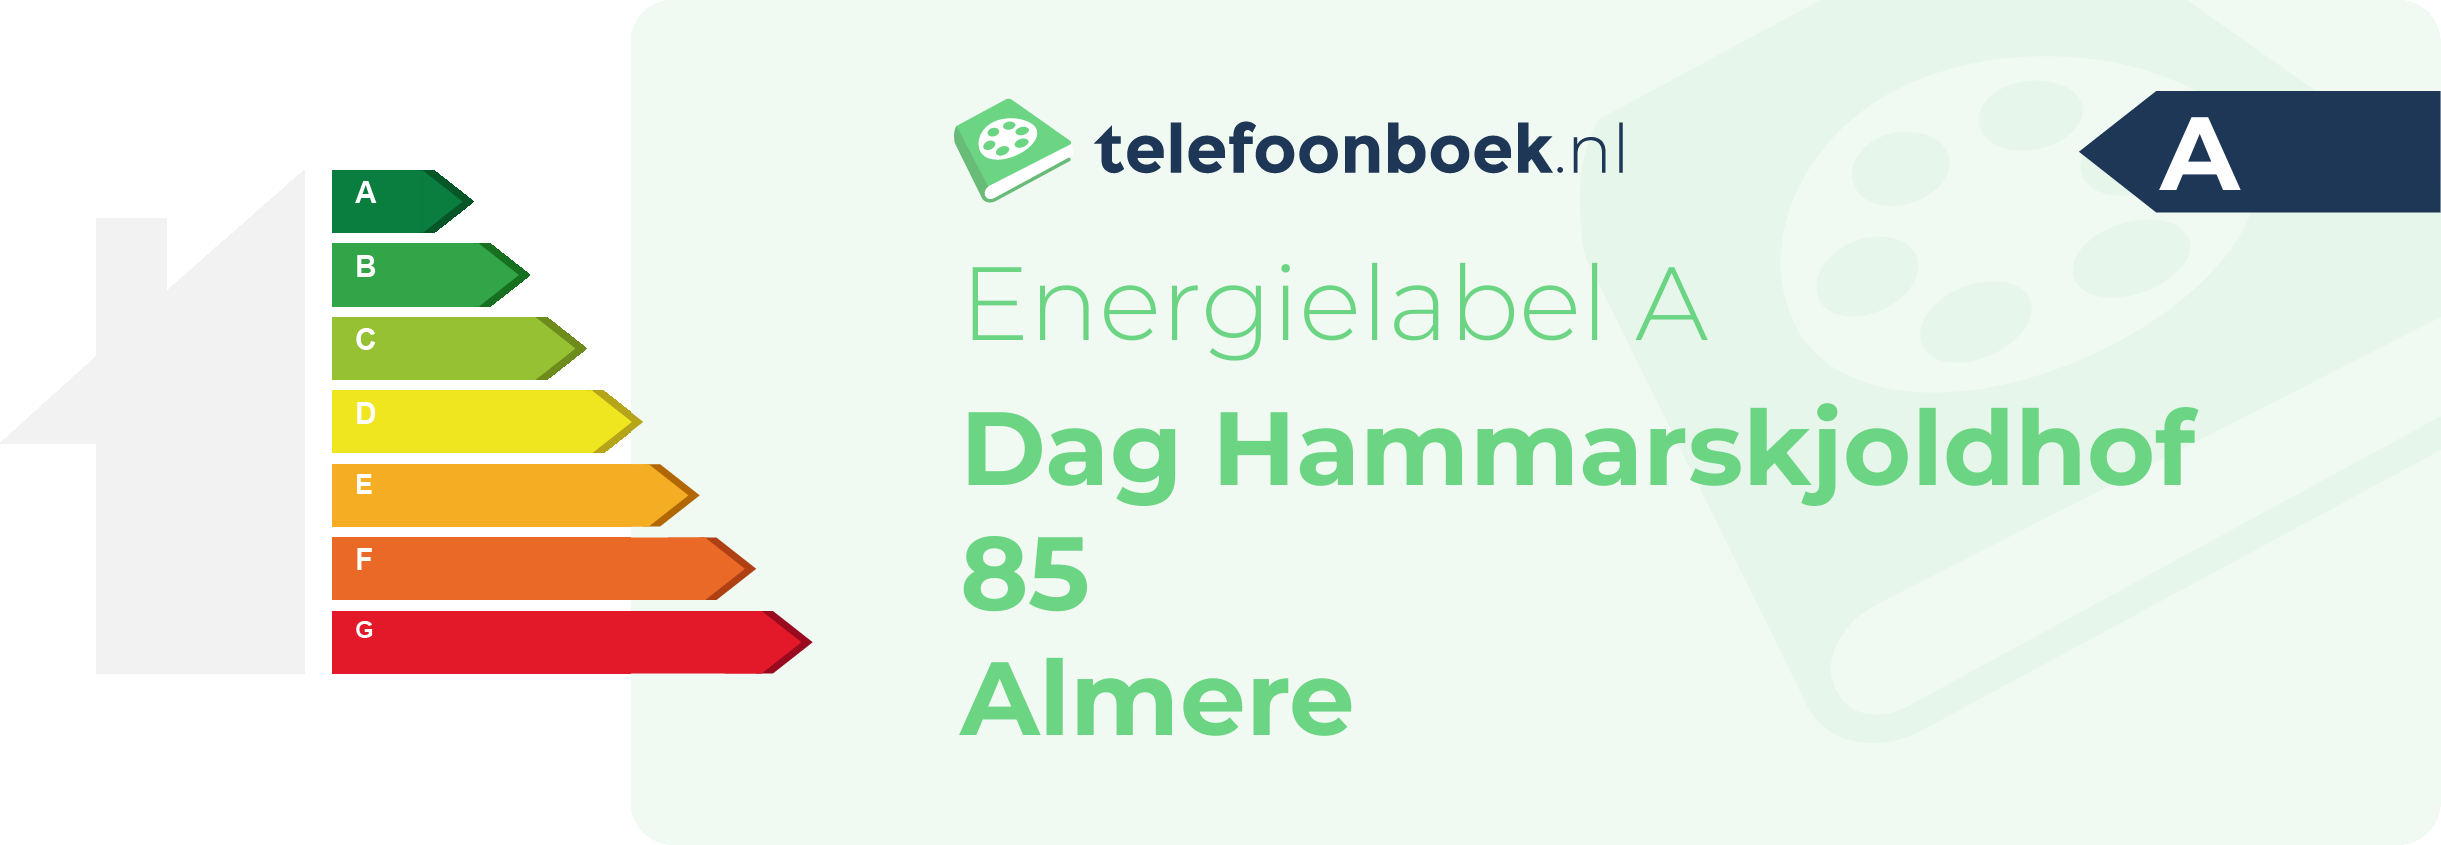 Energielabel Dag Hammarskjoldhof 85 Almere